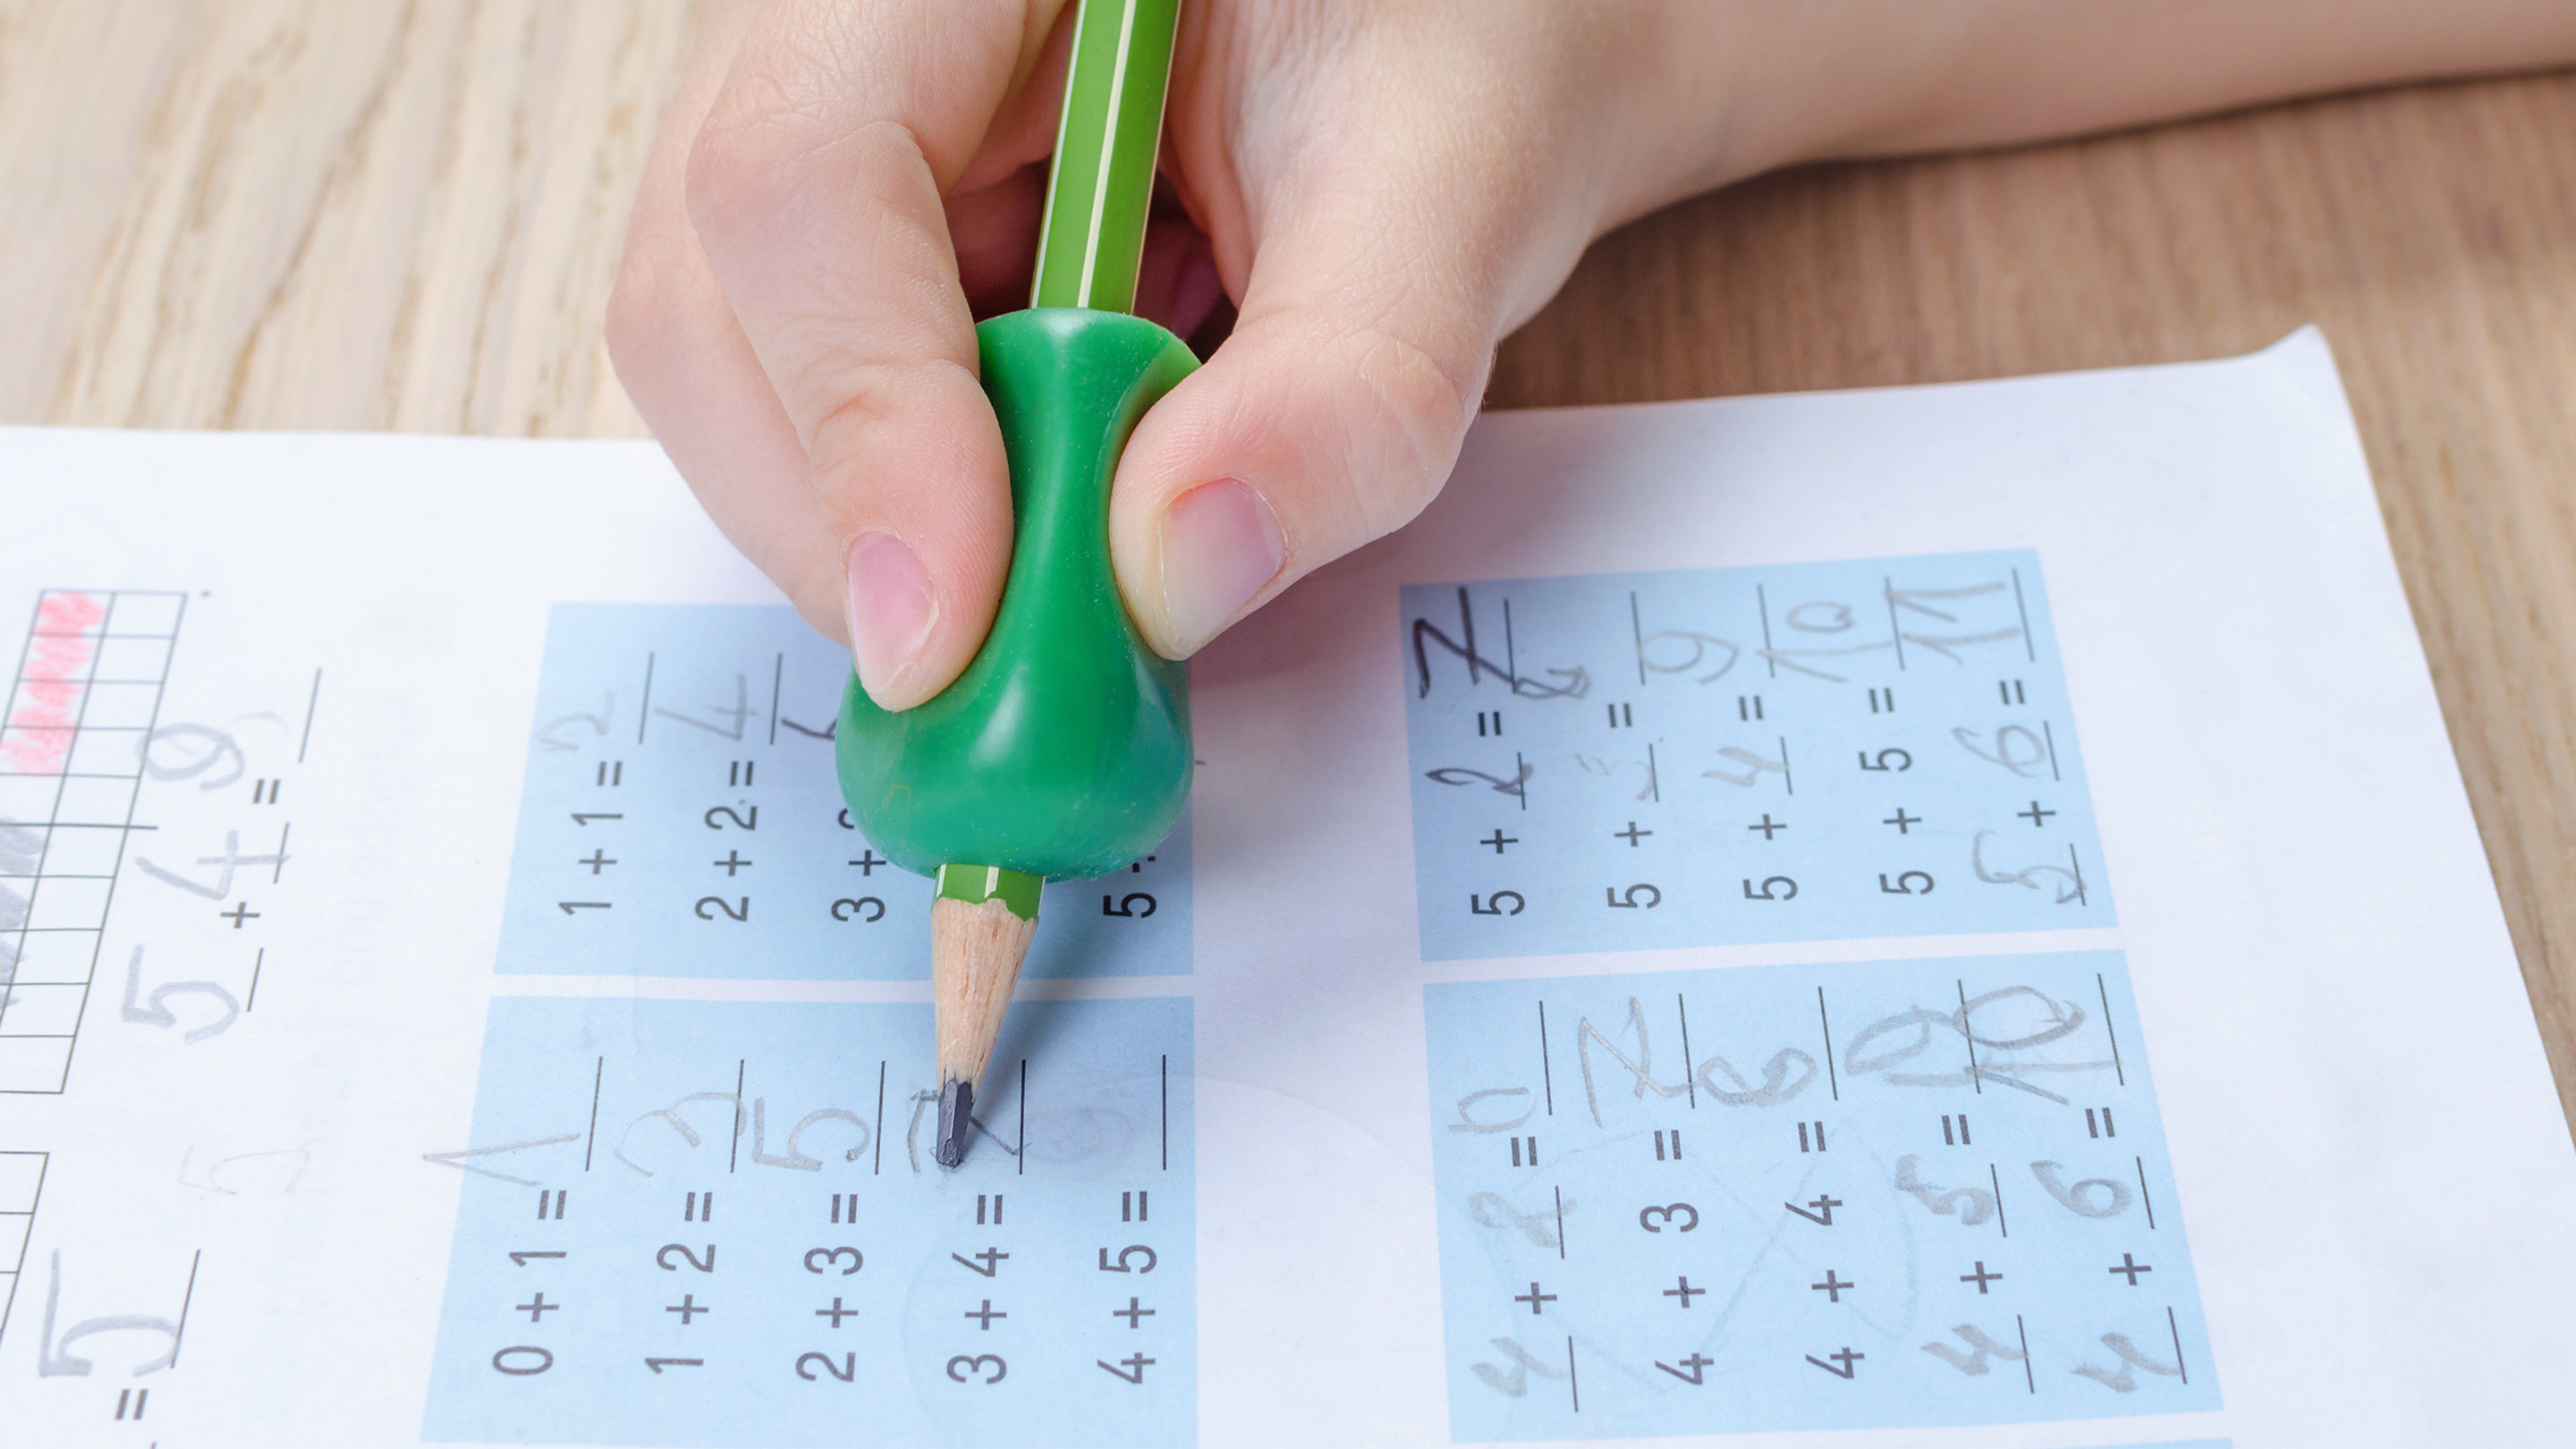 Tips To Improve Handwriting in Older Kids